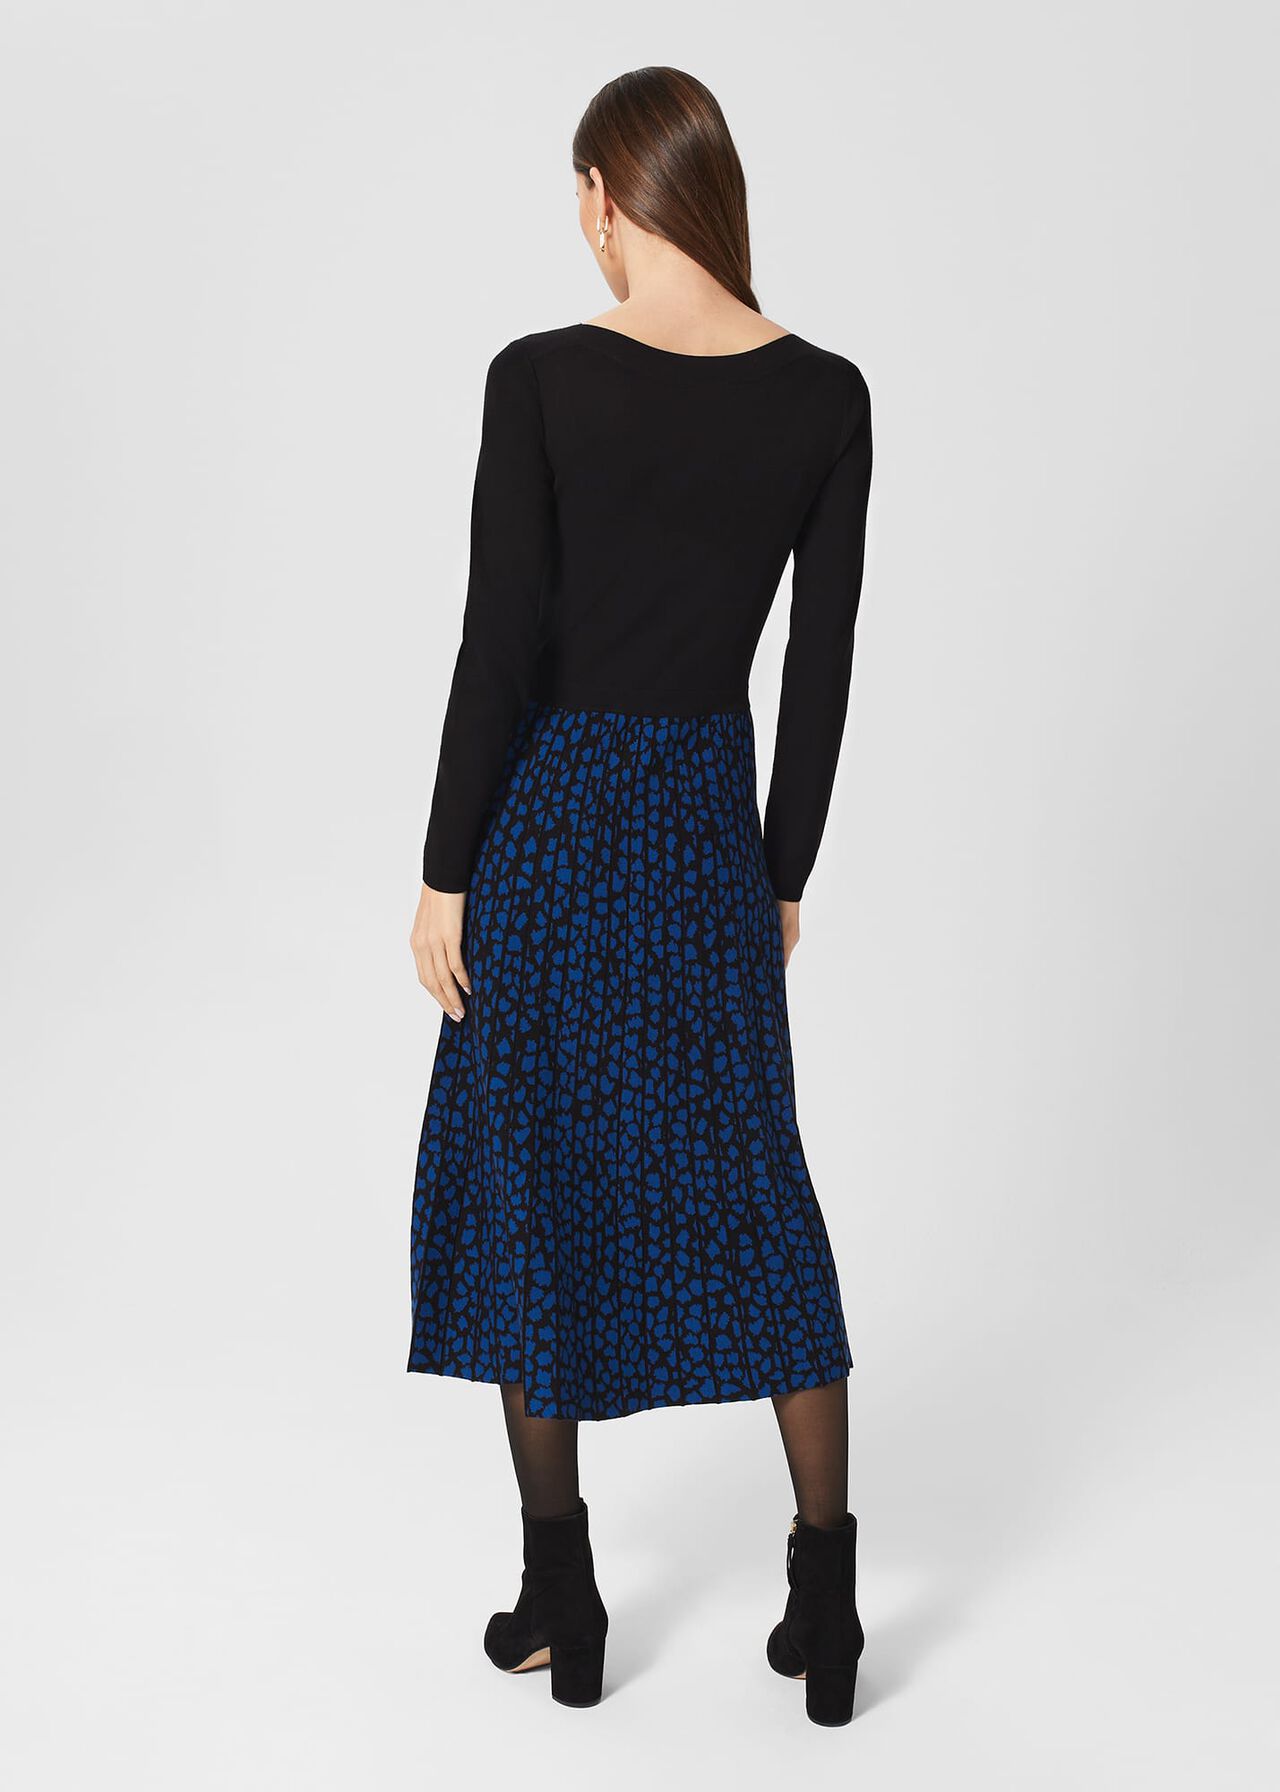 Petite Elena Knitted Dress, Black Blue, hi-res